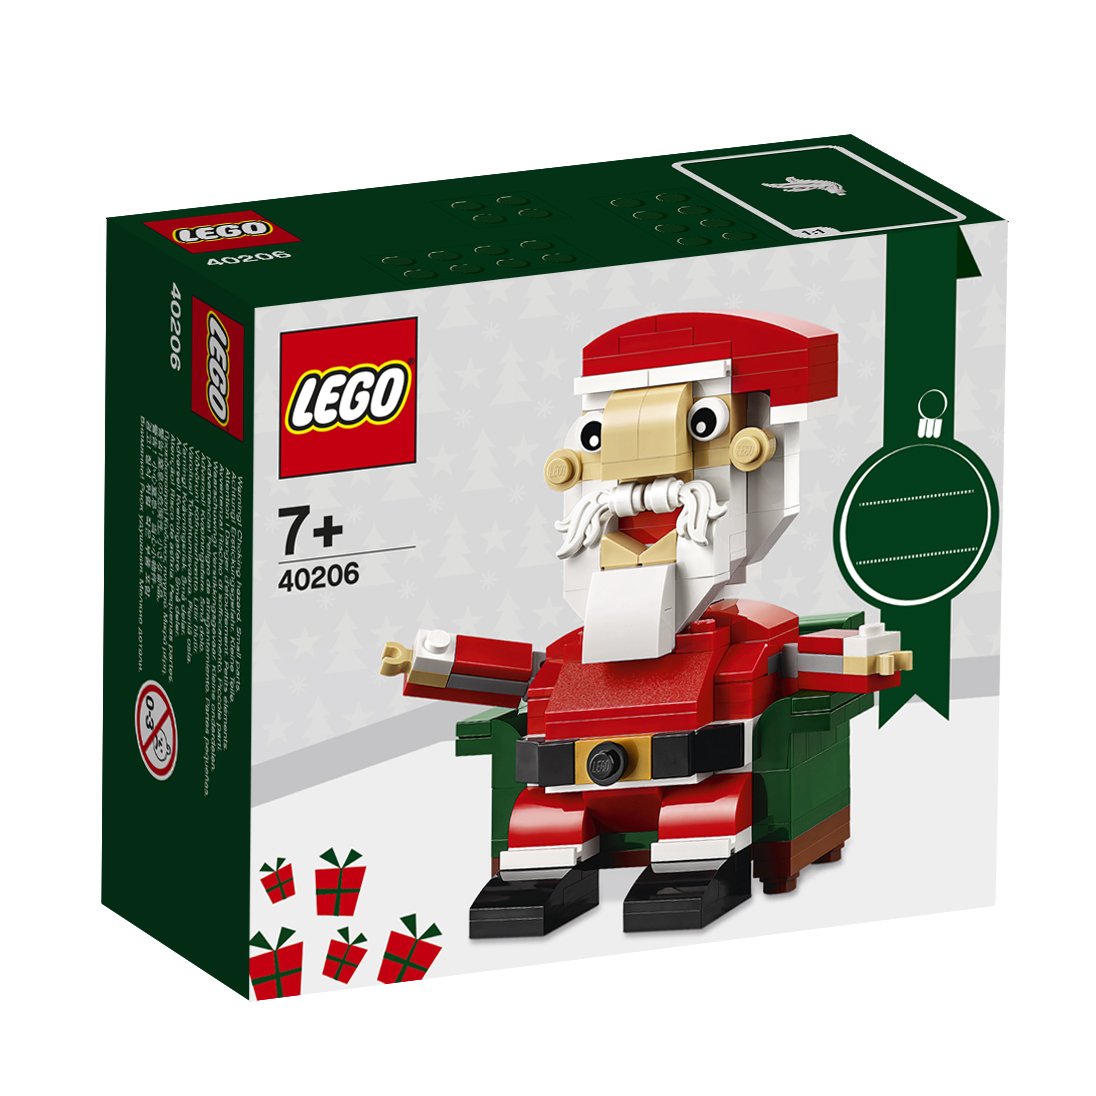 Lego Santa Set Years